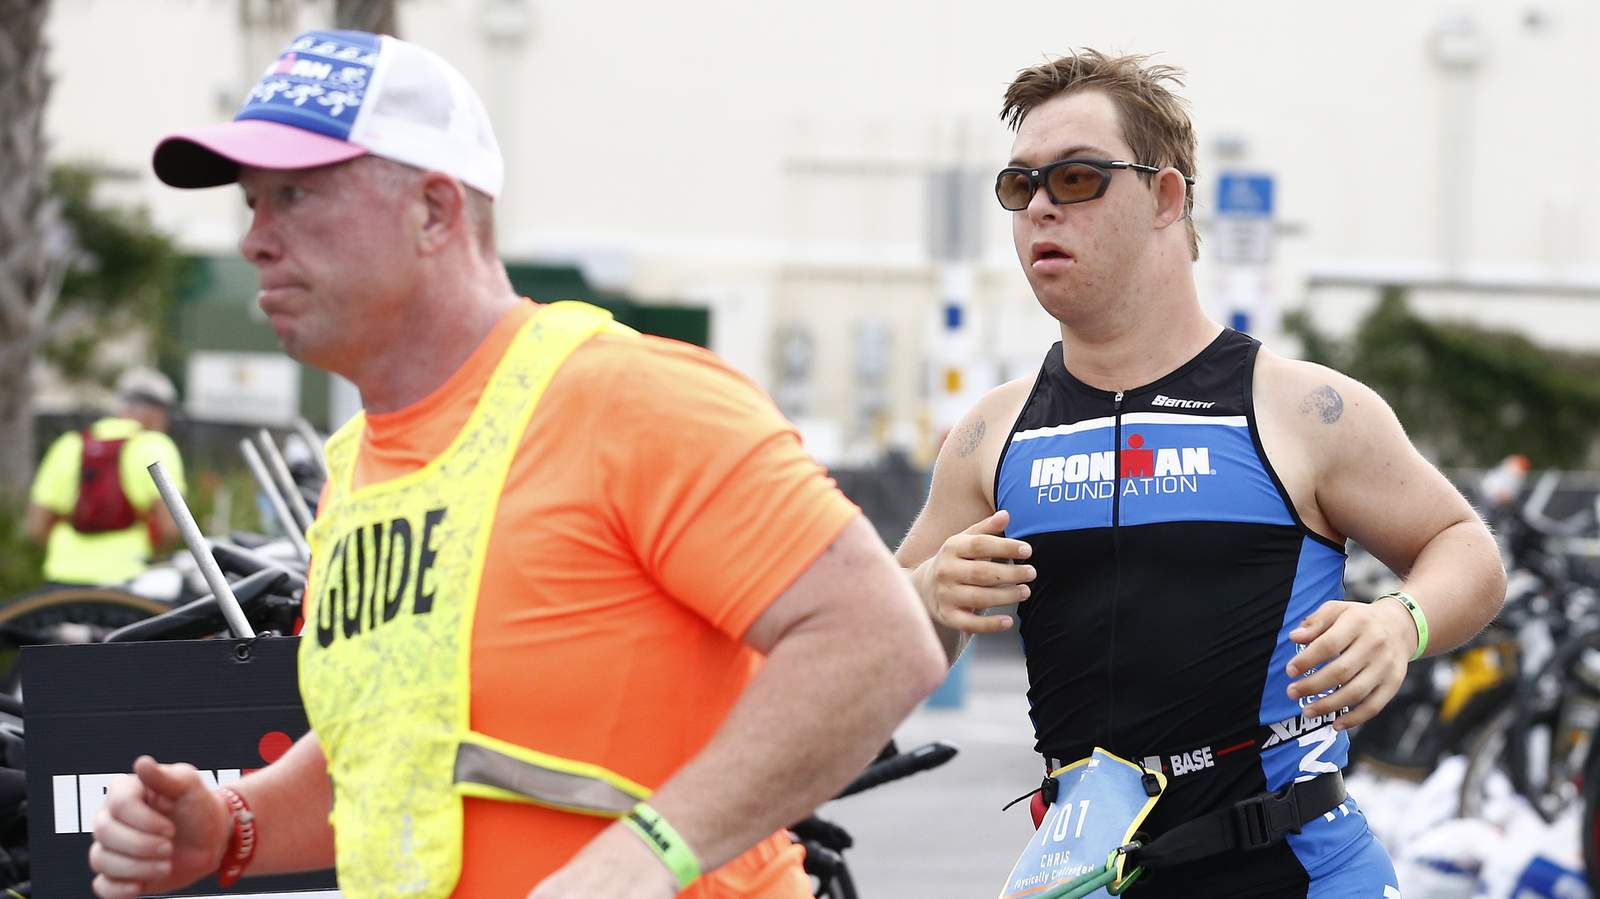 Atleta con síndrome de Down compite en el triatlón Ironman de Florida